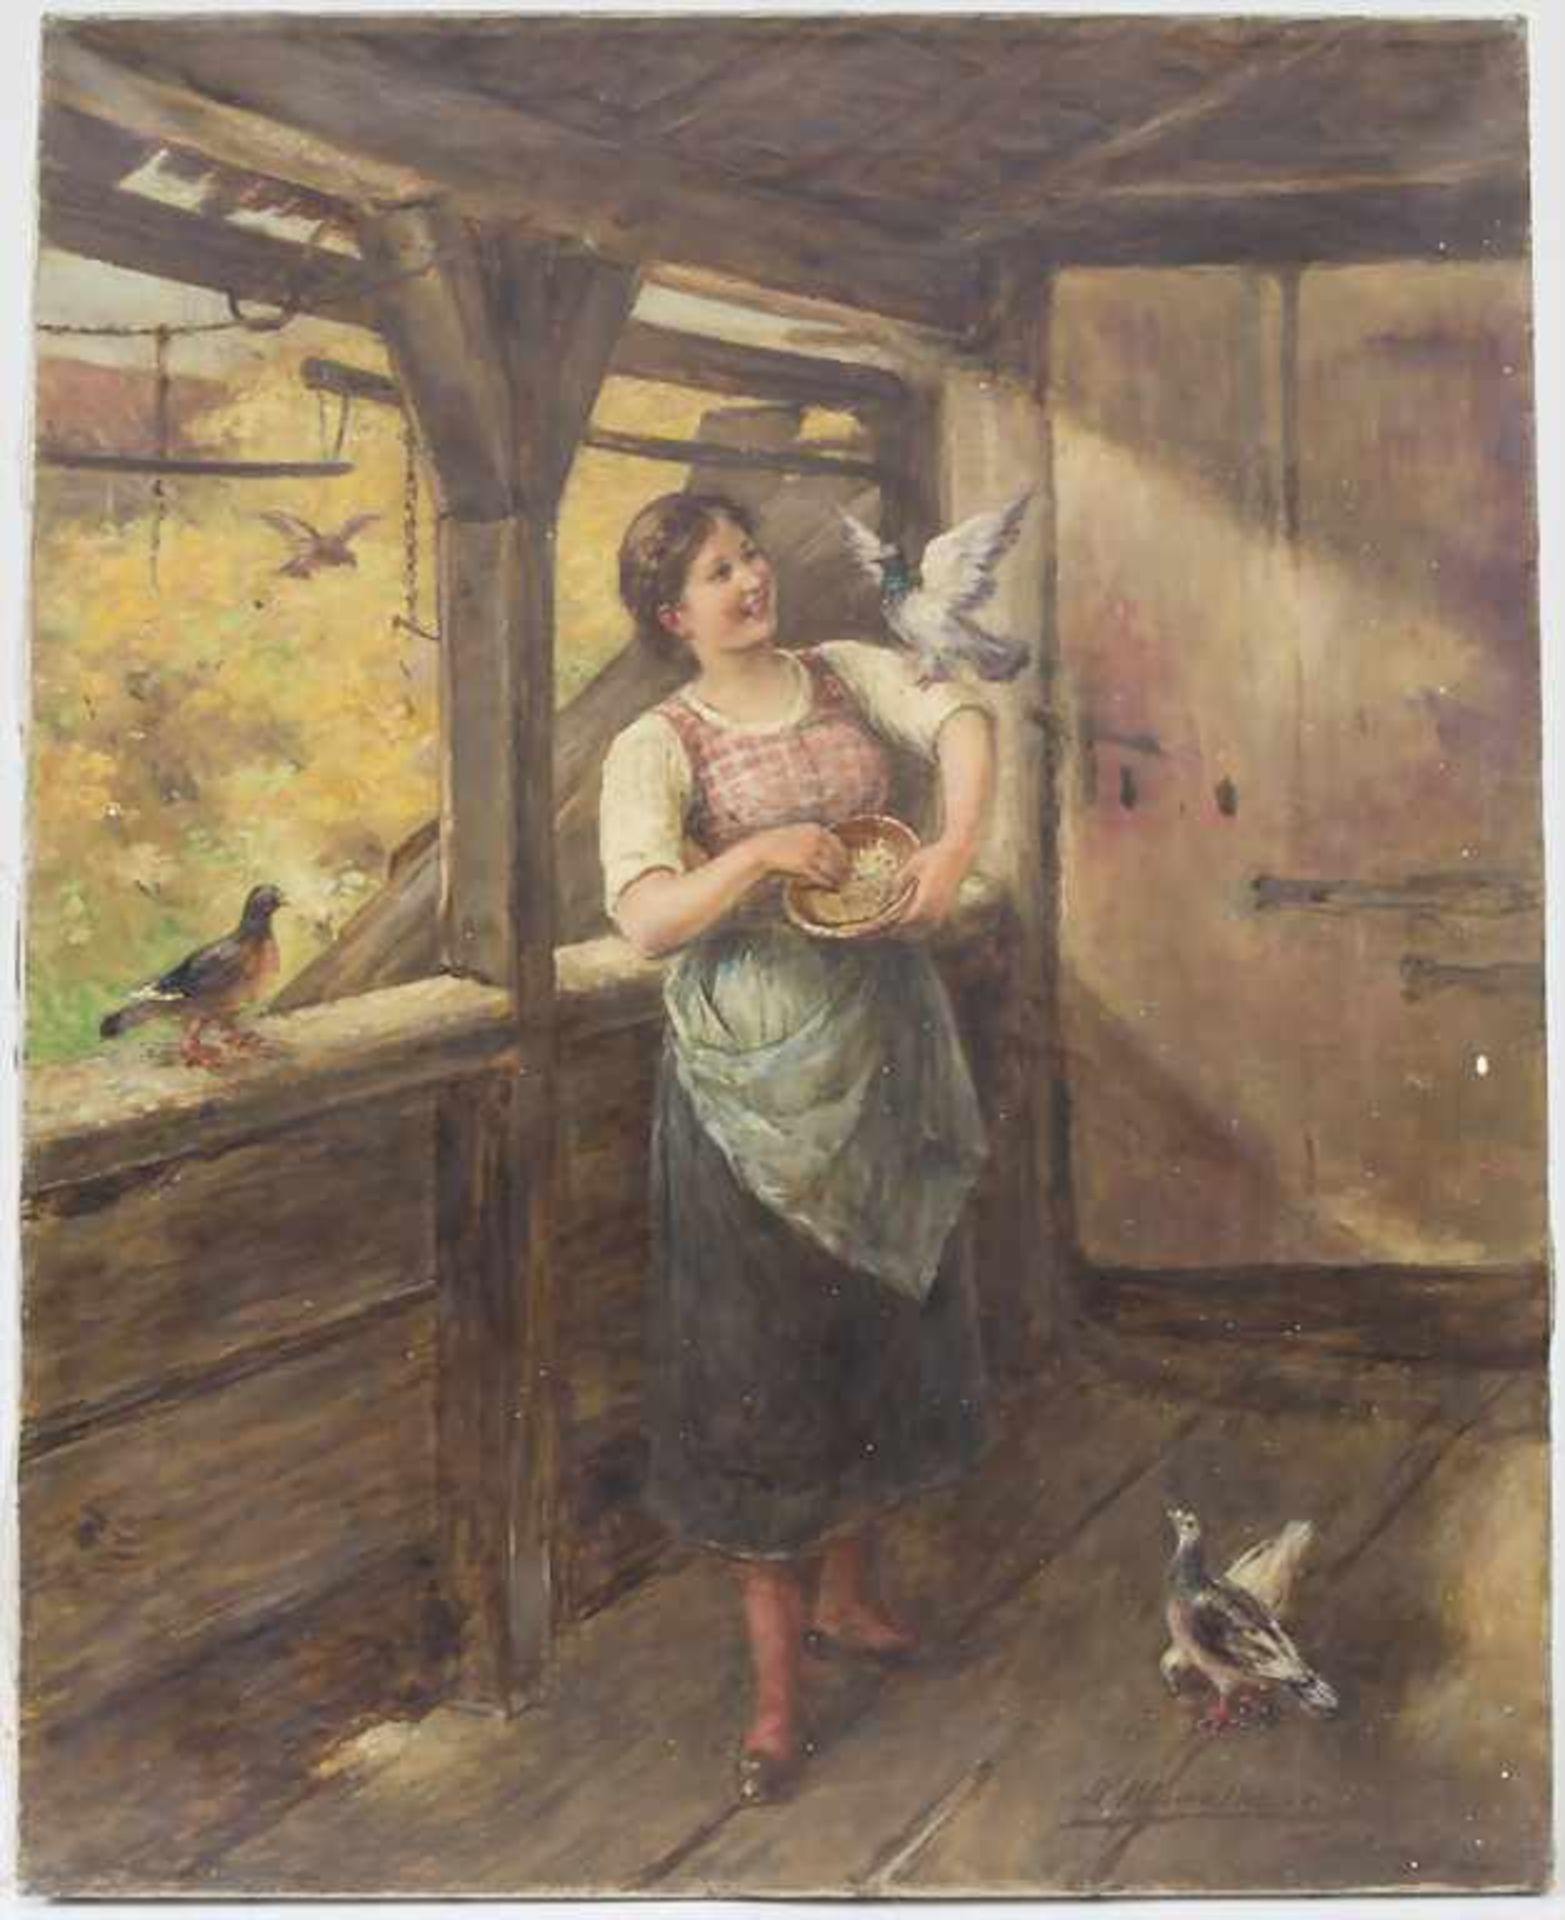 Ludwig Blume-Siebert (1853-1929), 'Junge Frau beim Taubenfüttern' / 'A young woman feeding doves'